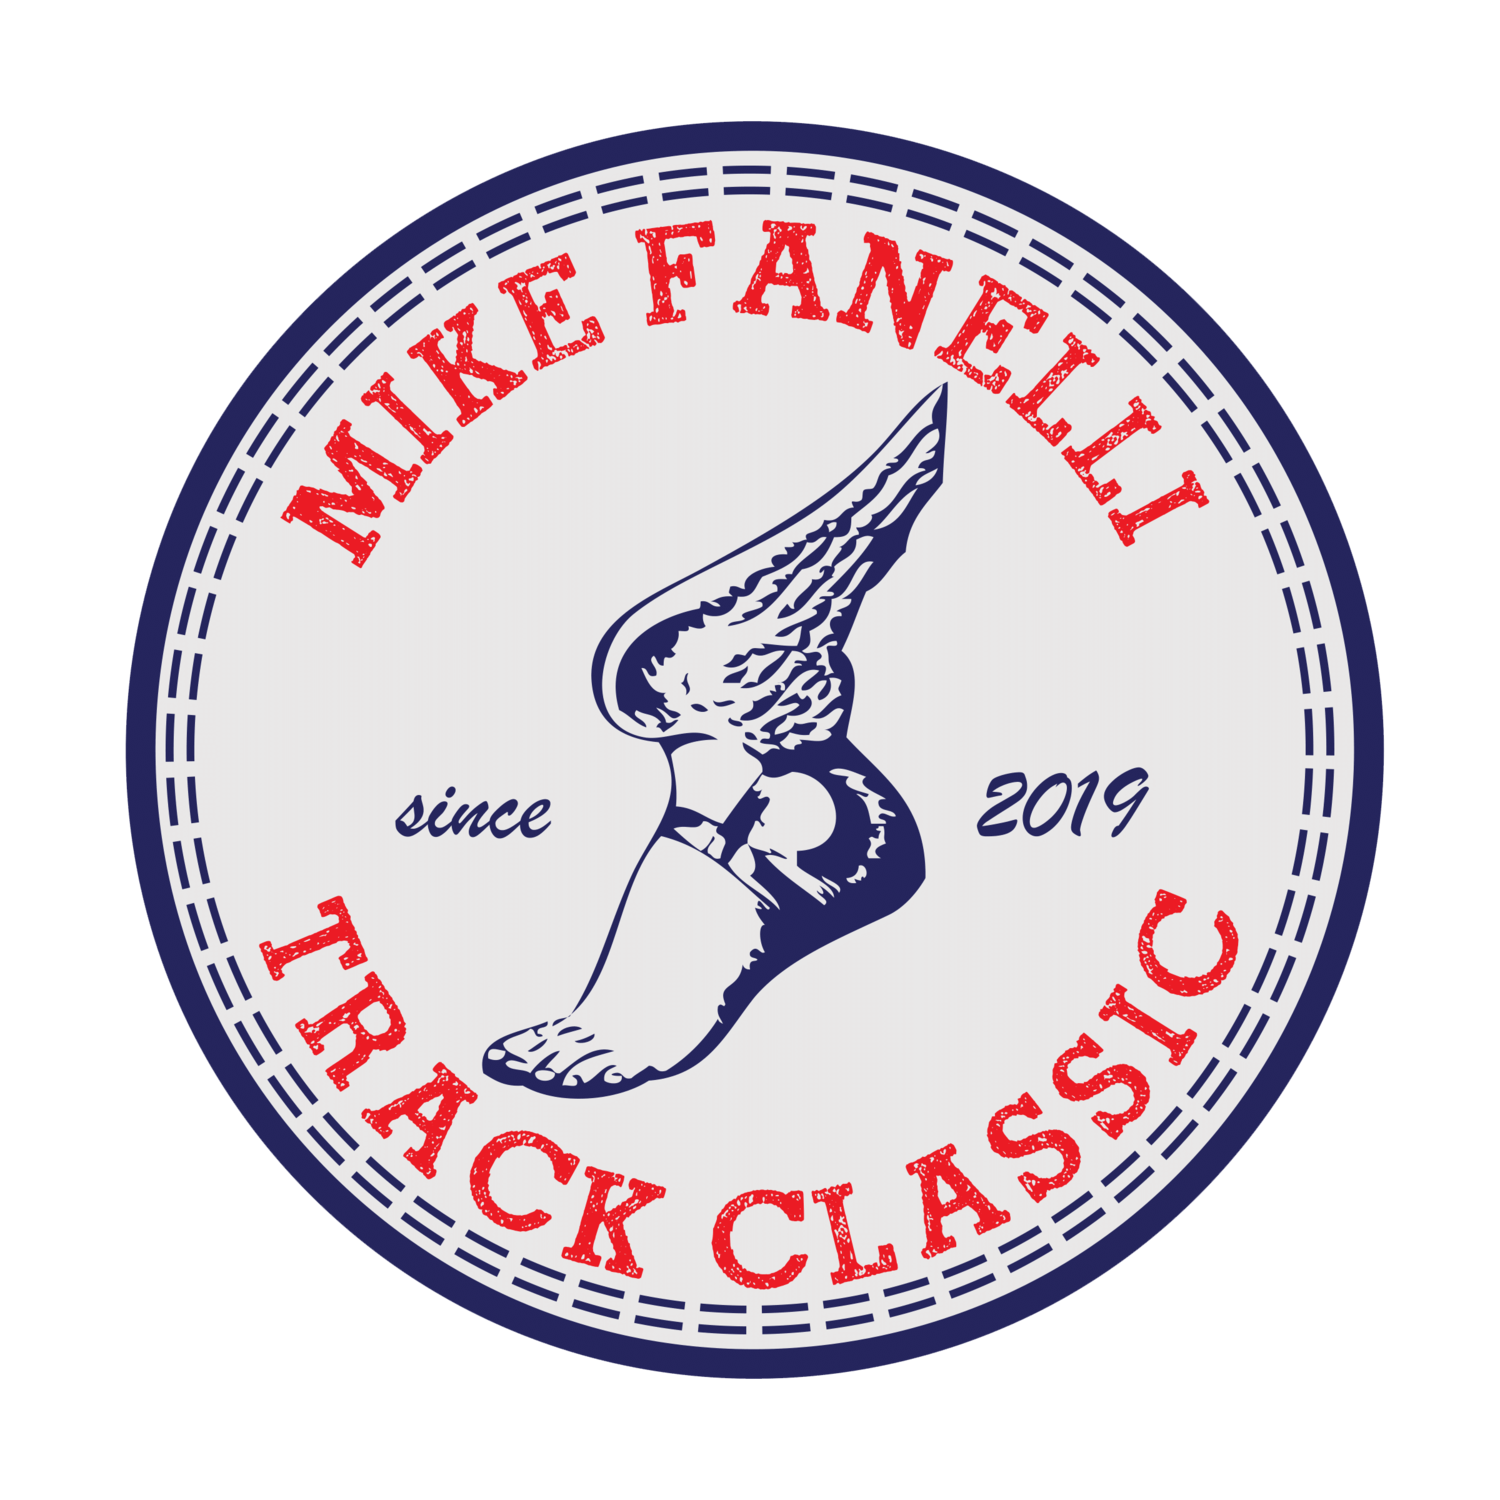 Mike Fanelli Track Classic